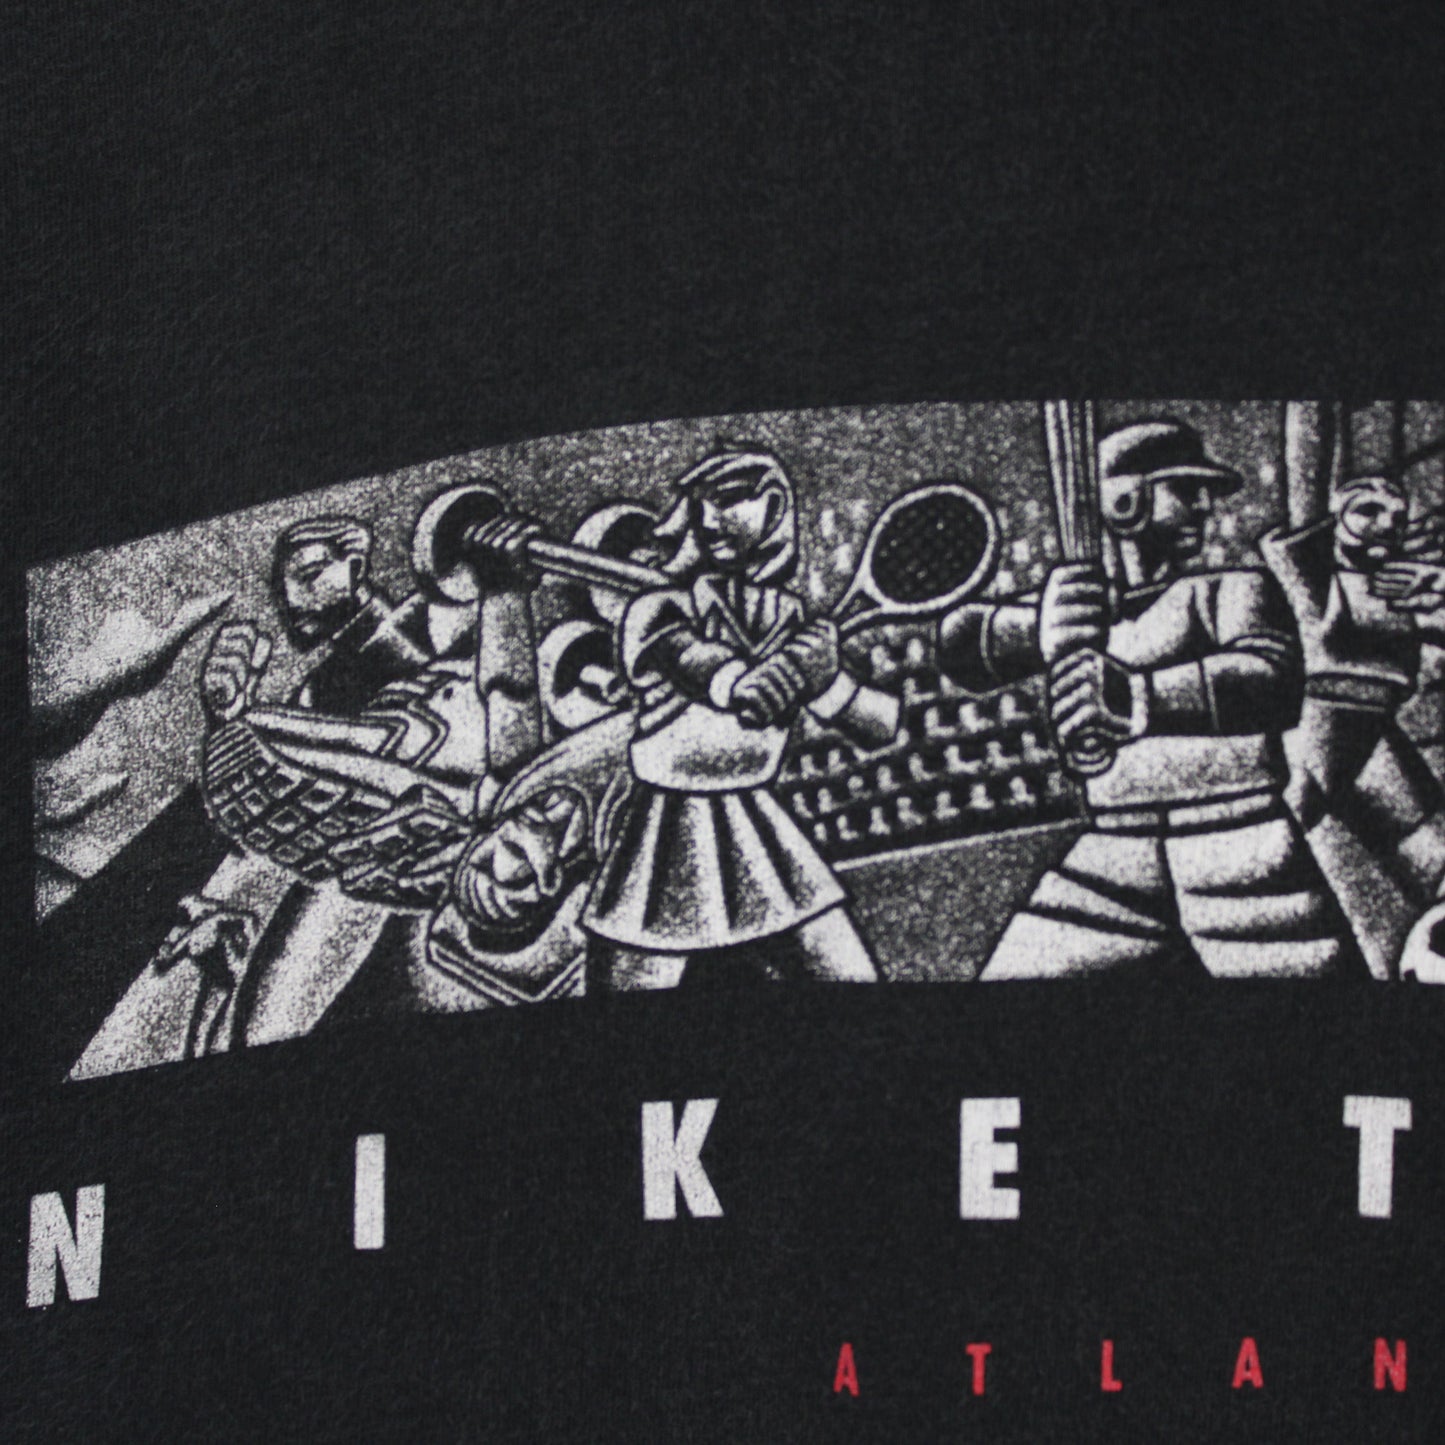 Vintage Nike Town Atlanta Tee - M